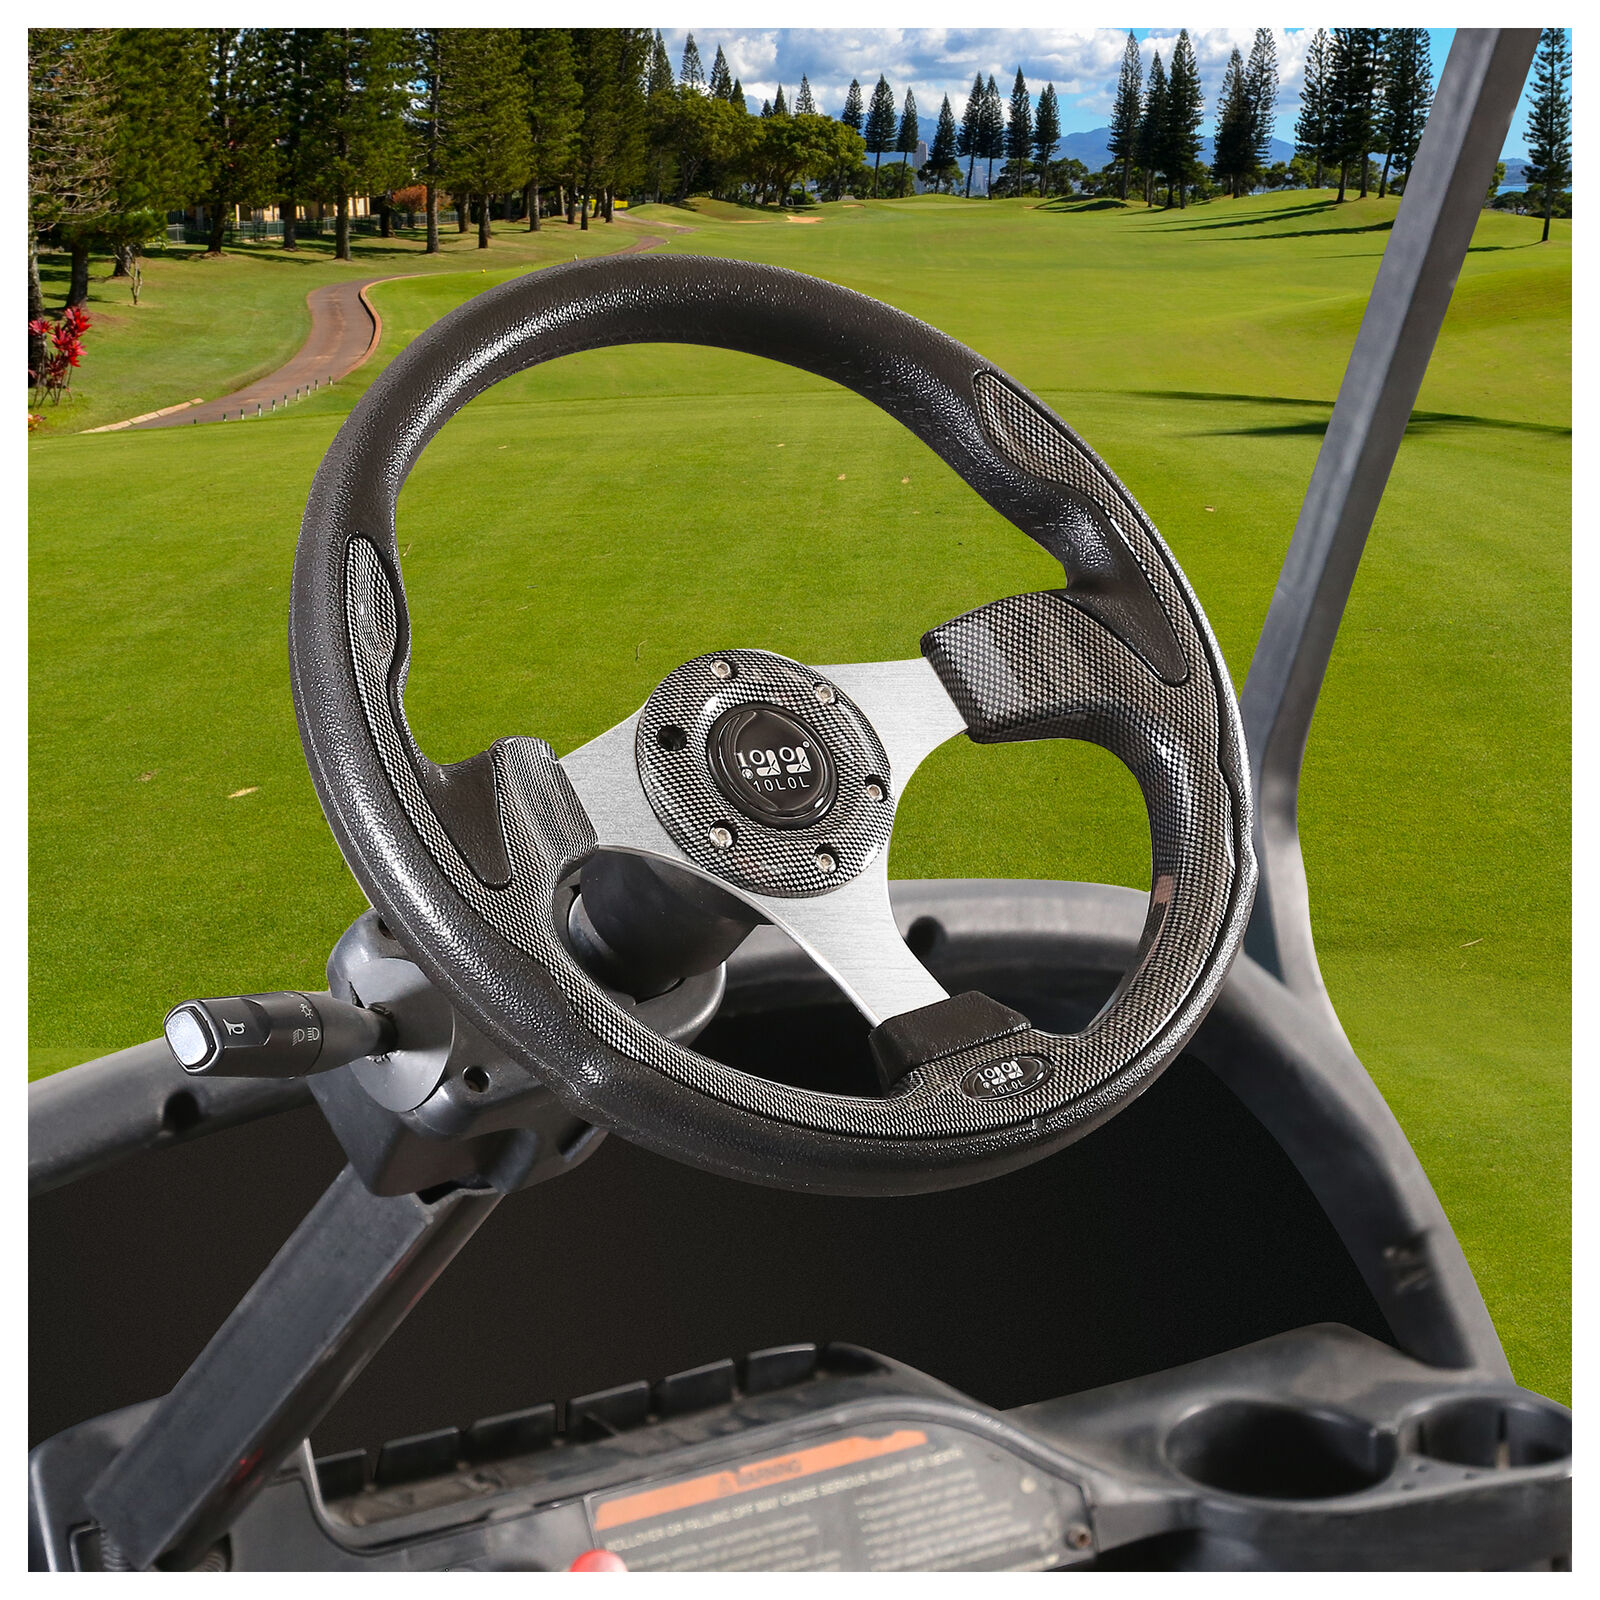 10L0L Golf Cart Steering Wheel & Black Hub Adapter for Club Car DS Gas Electric